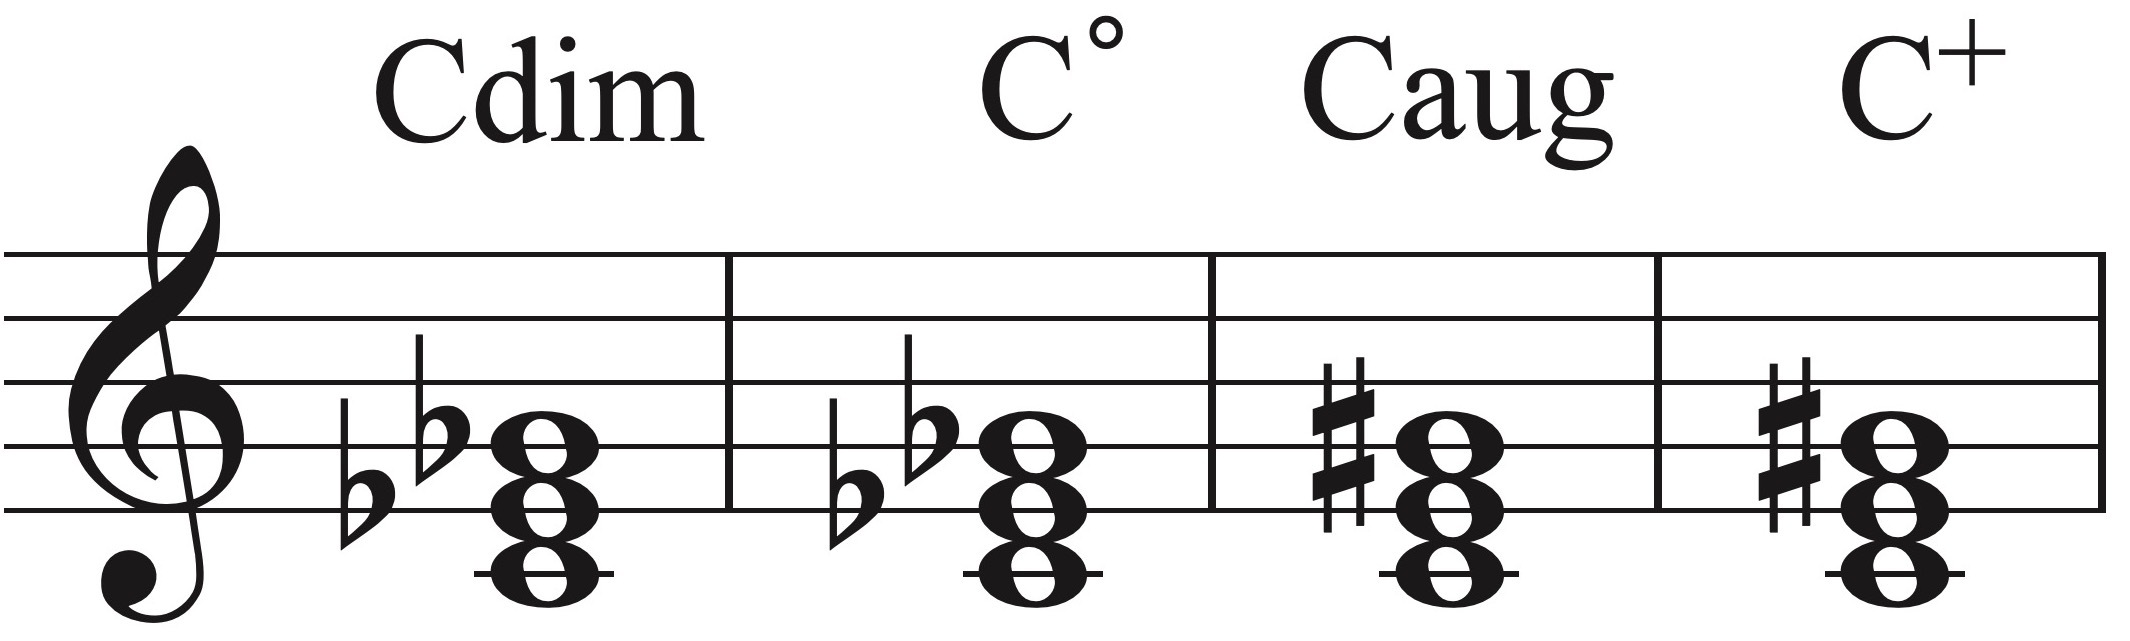 a chord piano